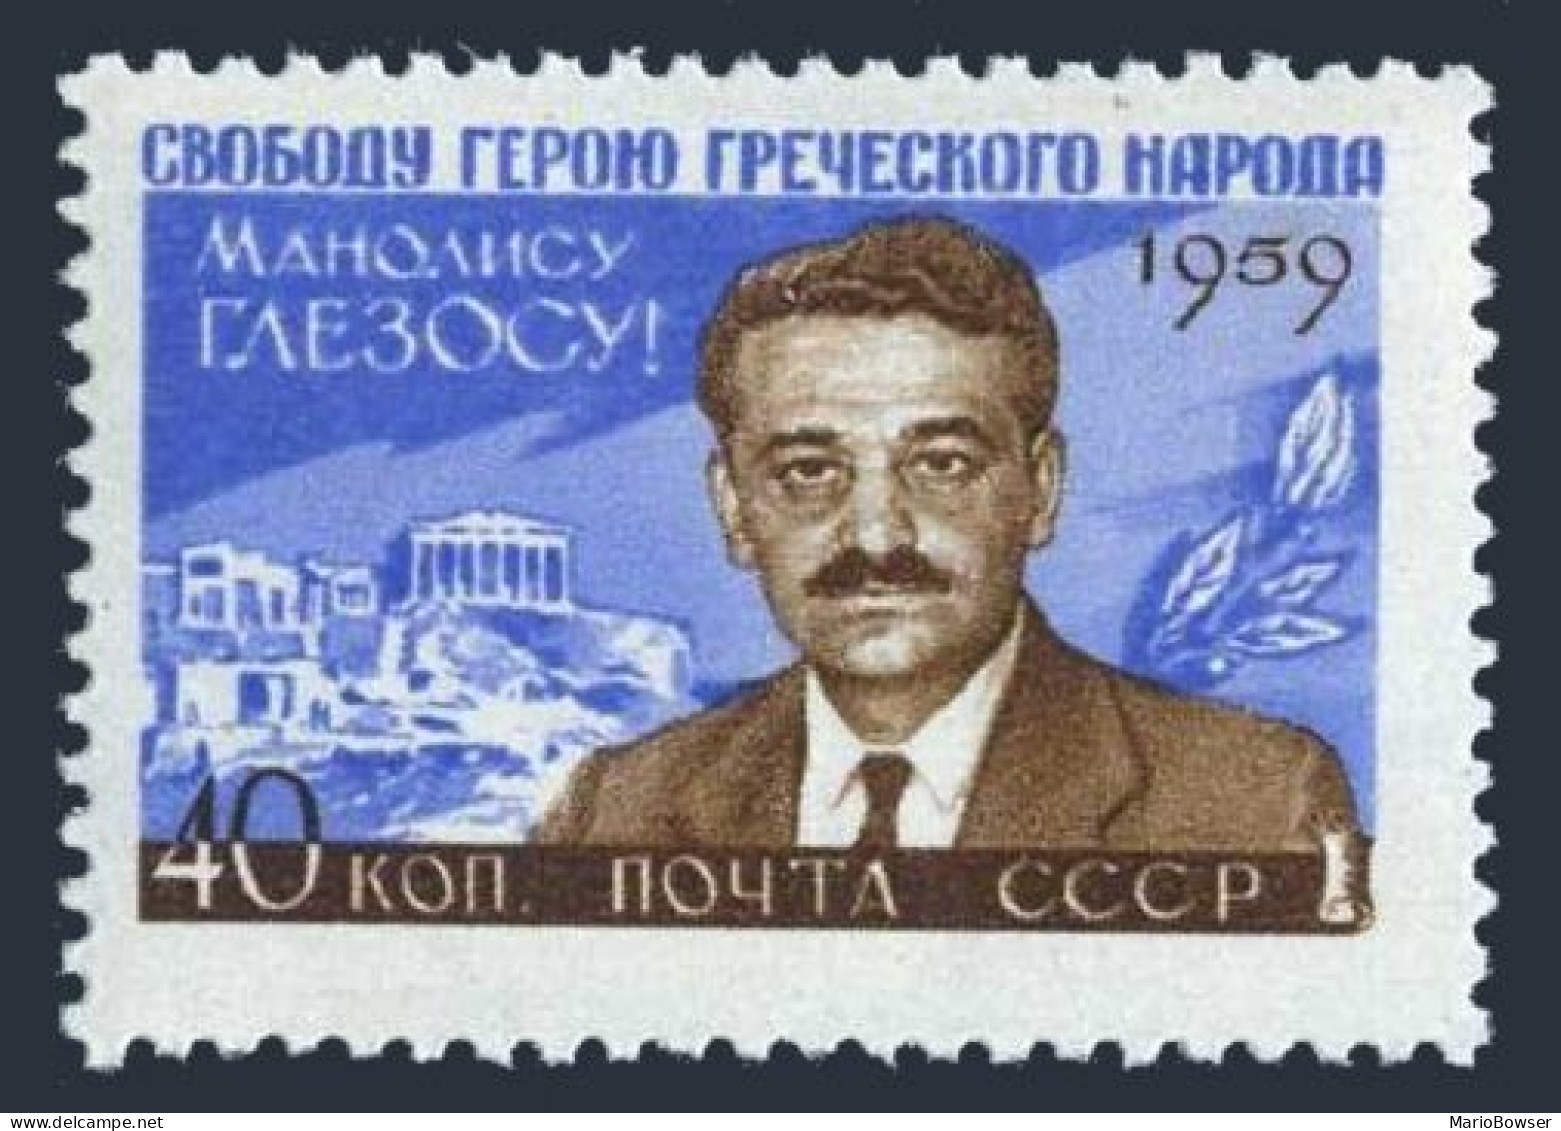 Russia 2270,MNH.Michel 2288. Manolis Glezos,Greek Communist.Acropolis,1959. - Neufs